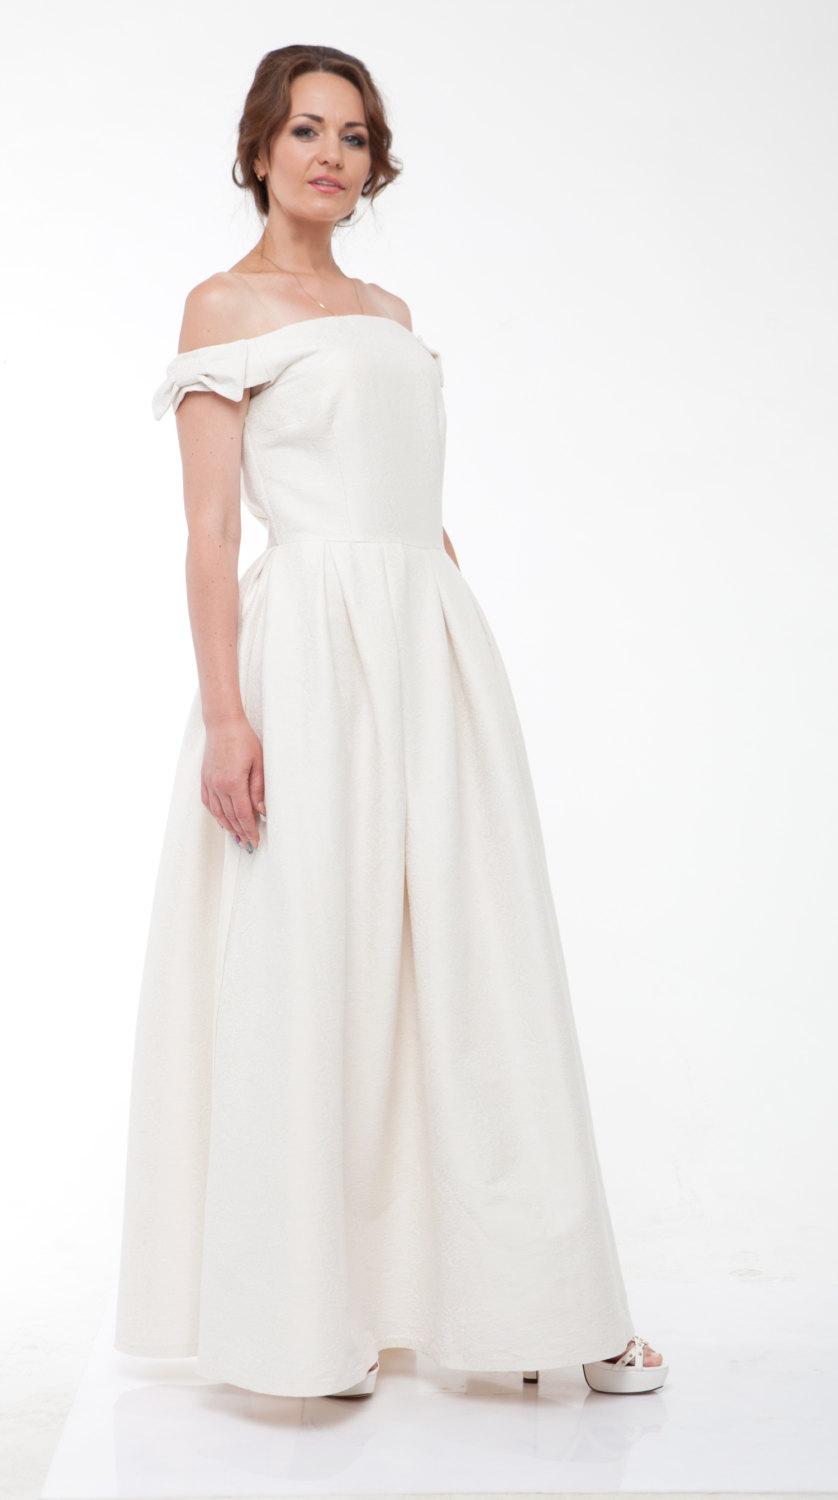 Mariage - White Wedding Dress Long Open Shoulders Flared Dress Bridesmaid Floor Length.